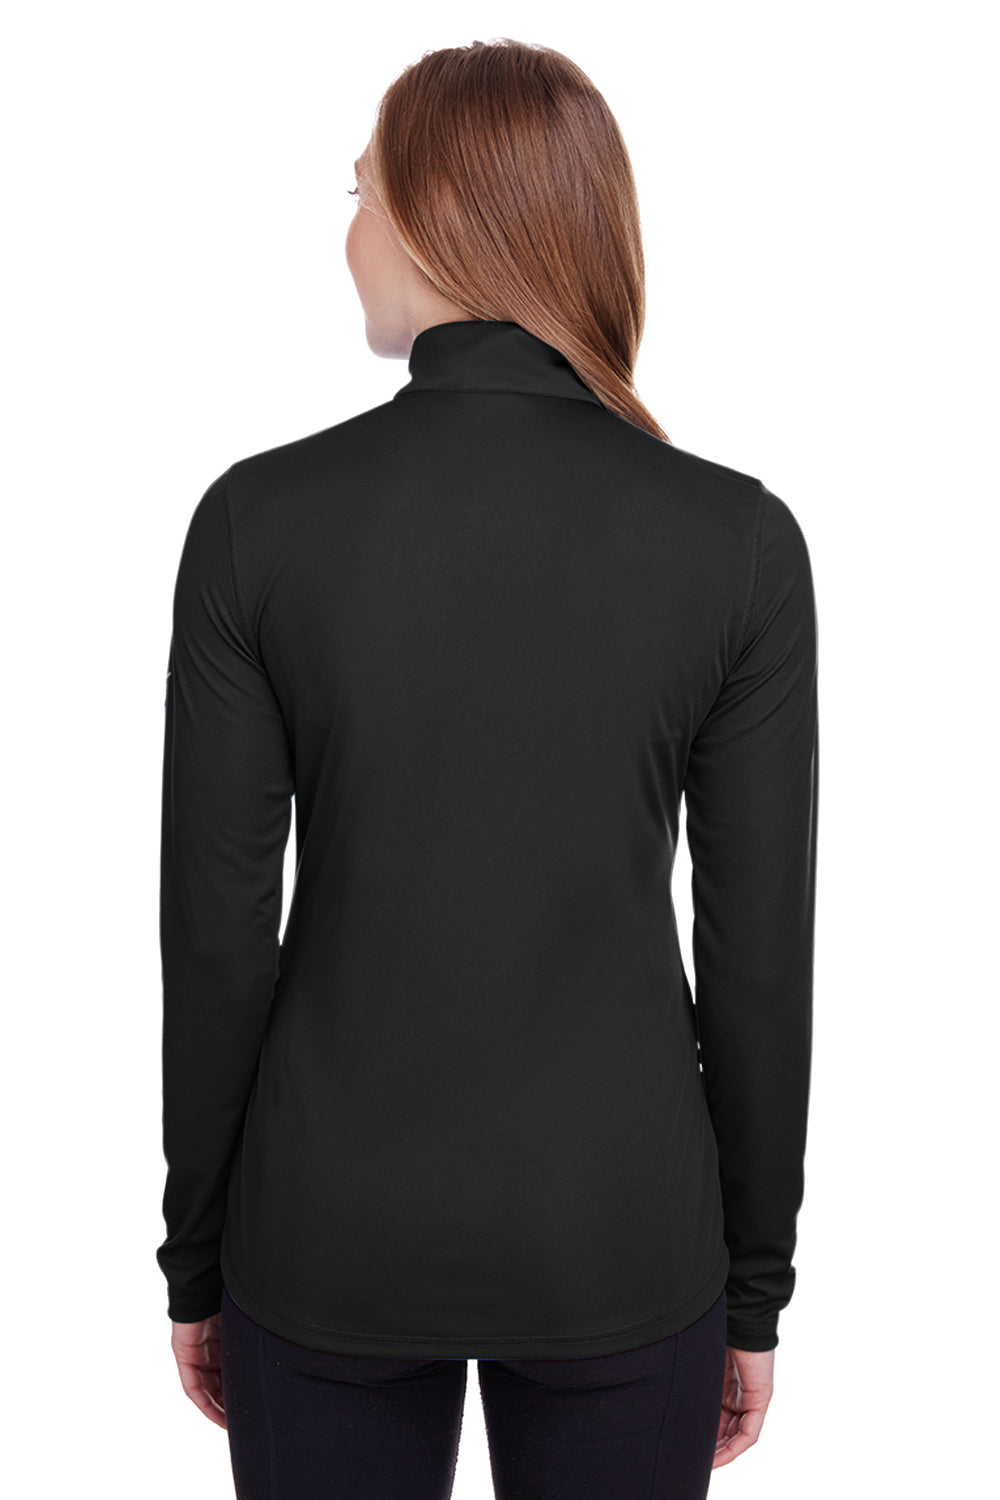 Puma 596803 Womens Icon Performance Moisture Wicking Full Zip Sweatshirt Black Back